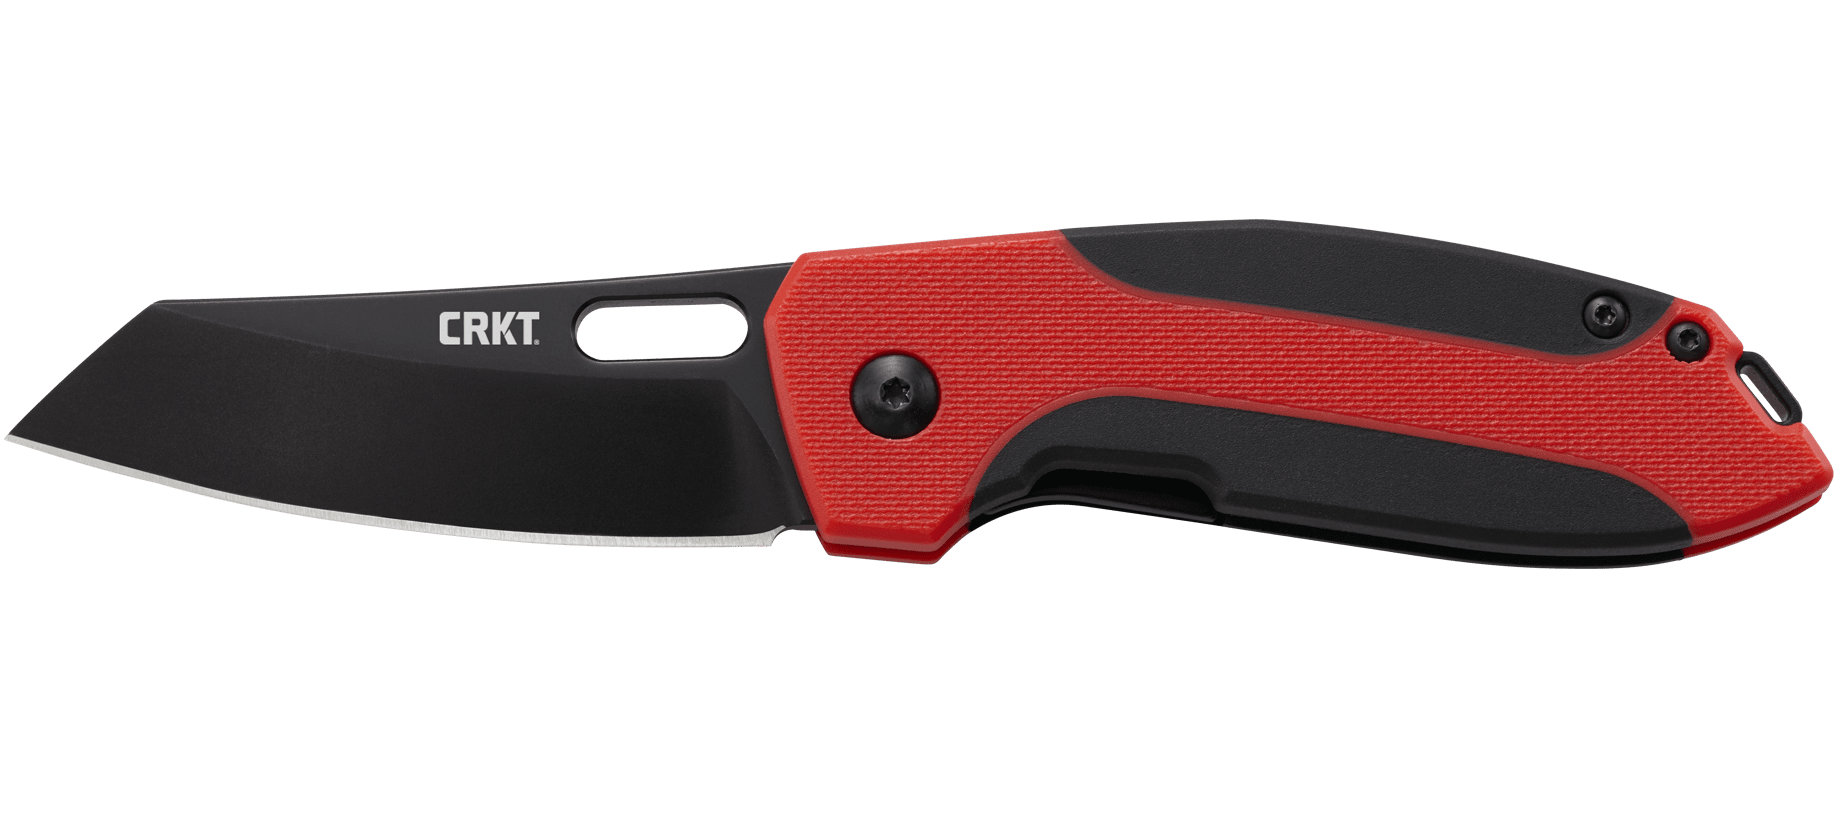 Складной нож CRKT Sketch™ Red, сталь 8Cr13MoV, рукоять ABS пластик - фото 2